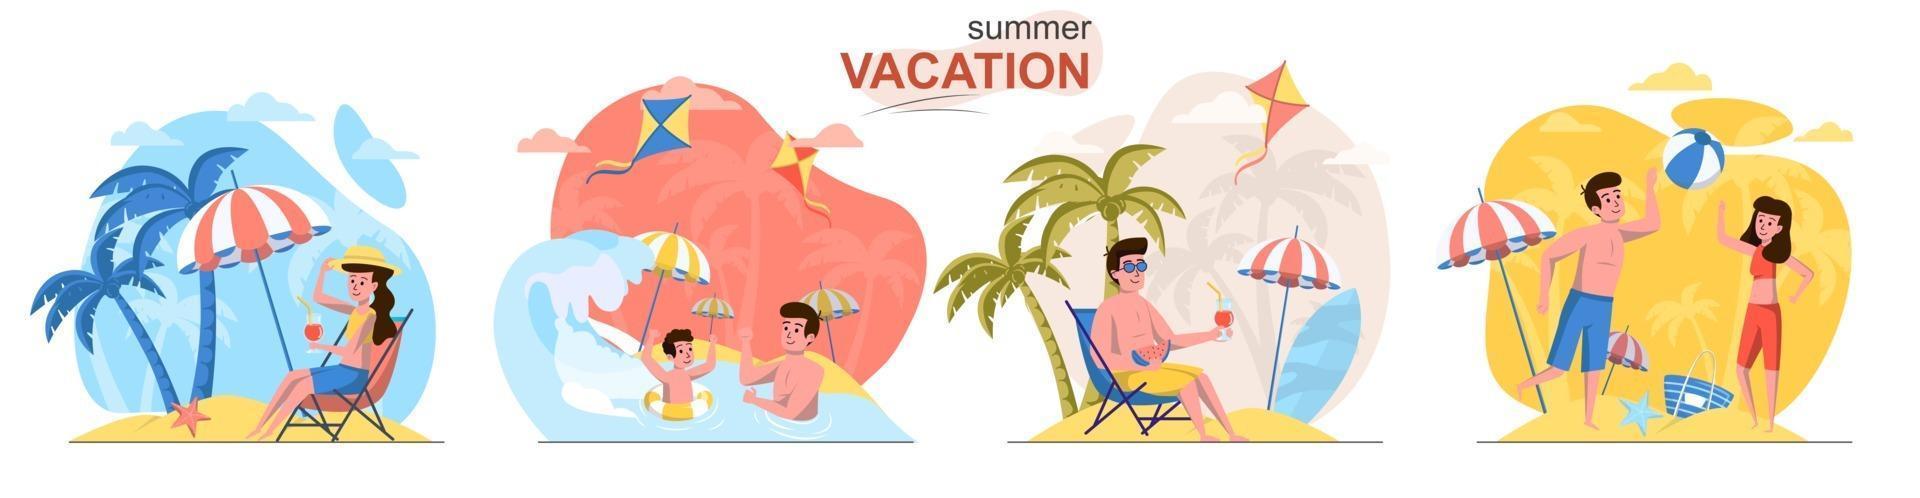 Summer vacation flat design concept scenes set vector